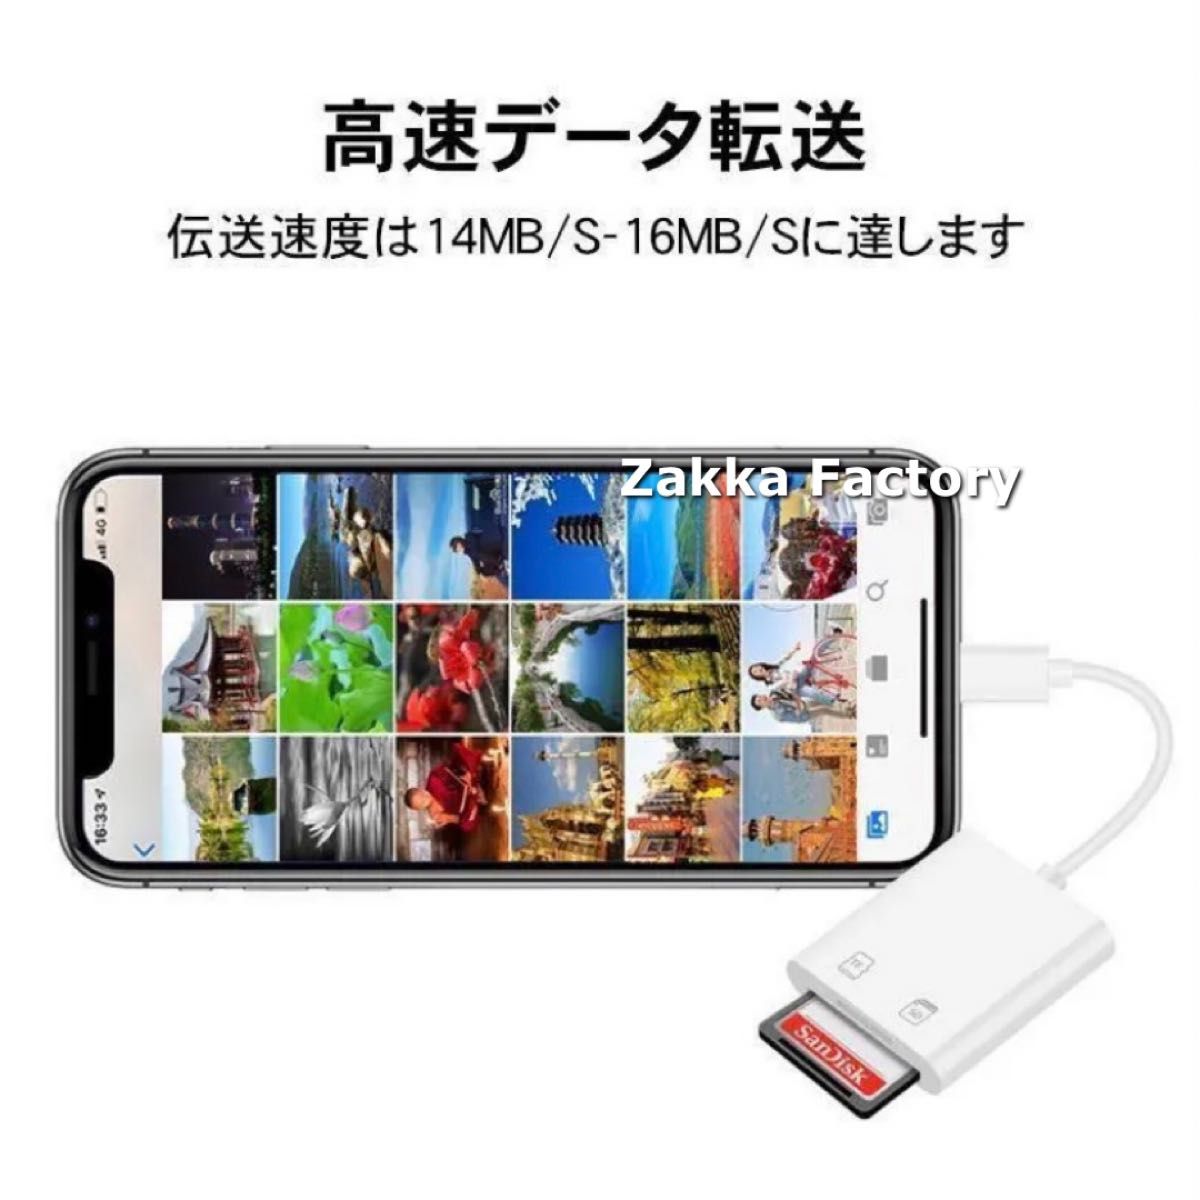 2in1 iphone ipad アイフォン アイホン アイパッド SDカードリーダー 映像 写真 動画 データ保存 転送